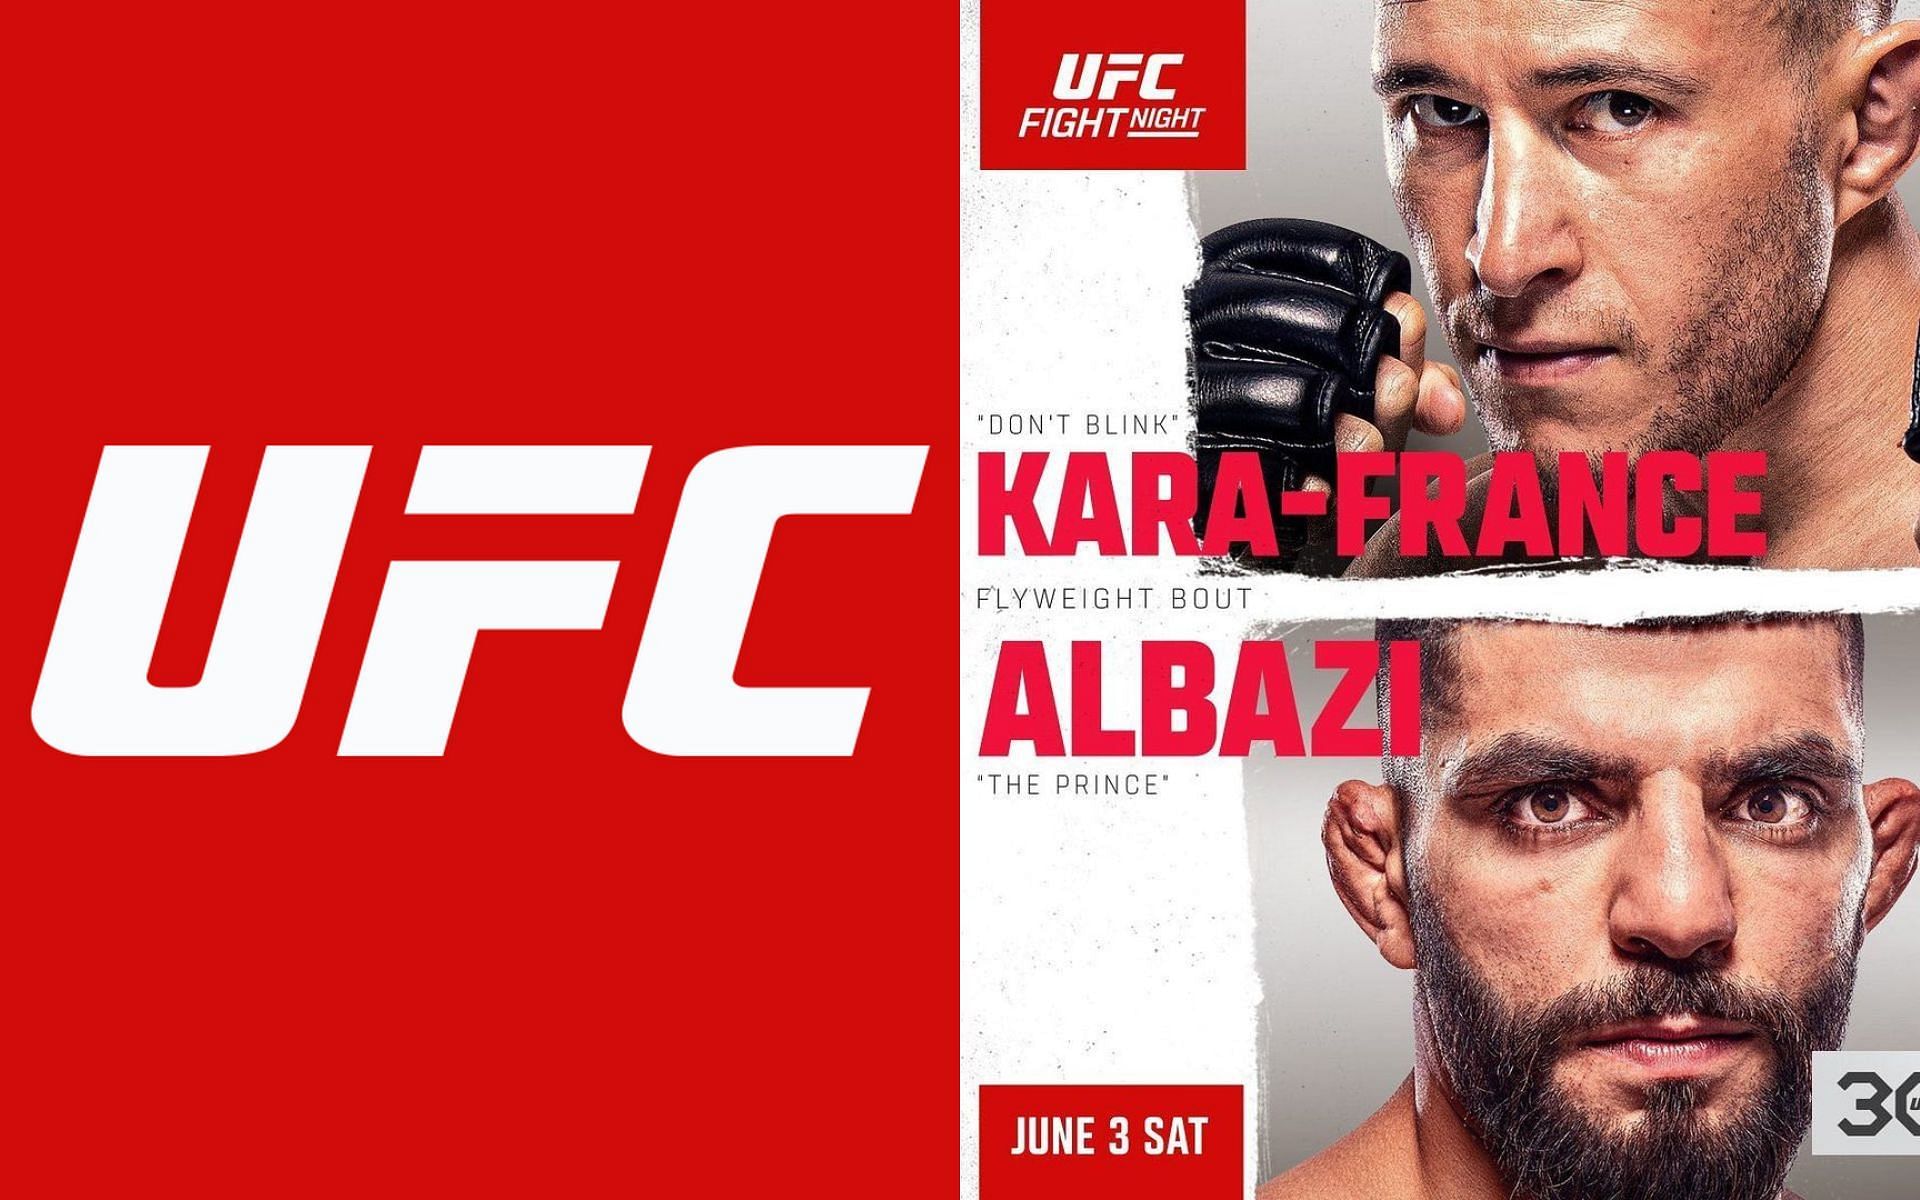 UFC on ESPN: Kai Kara-Francs vs.Amir Albazi will take place on June 3